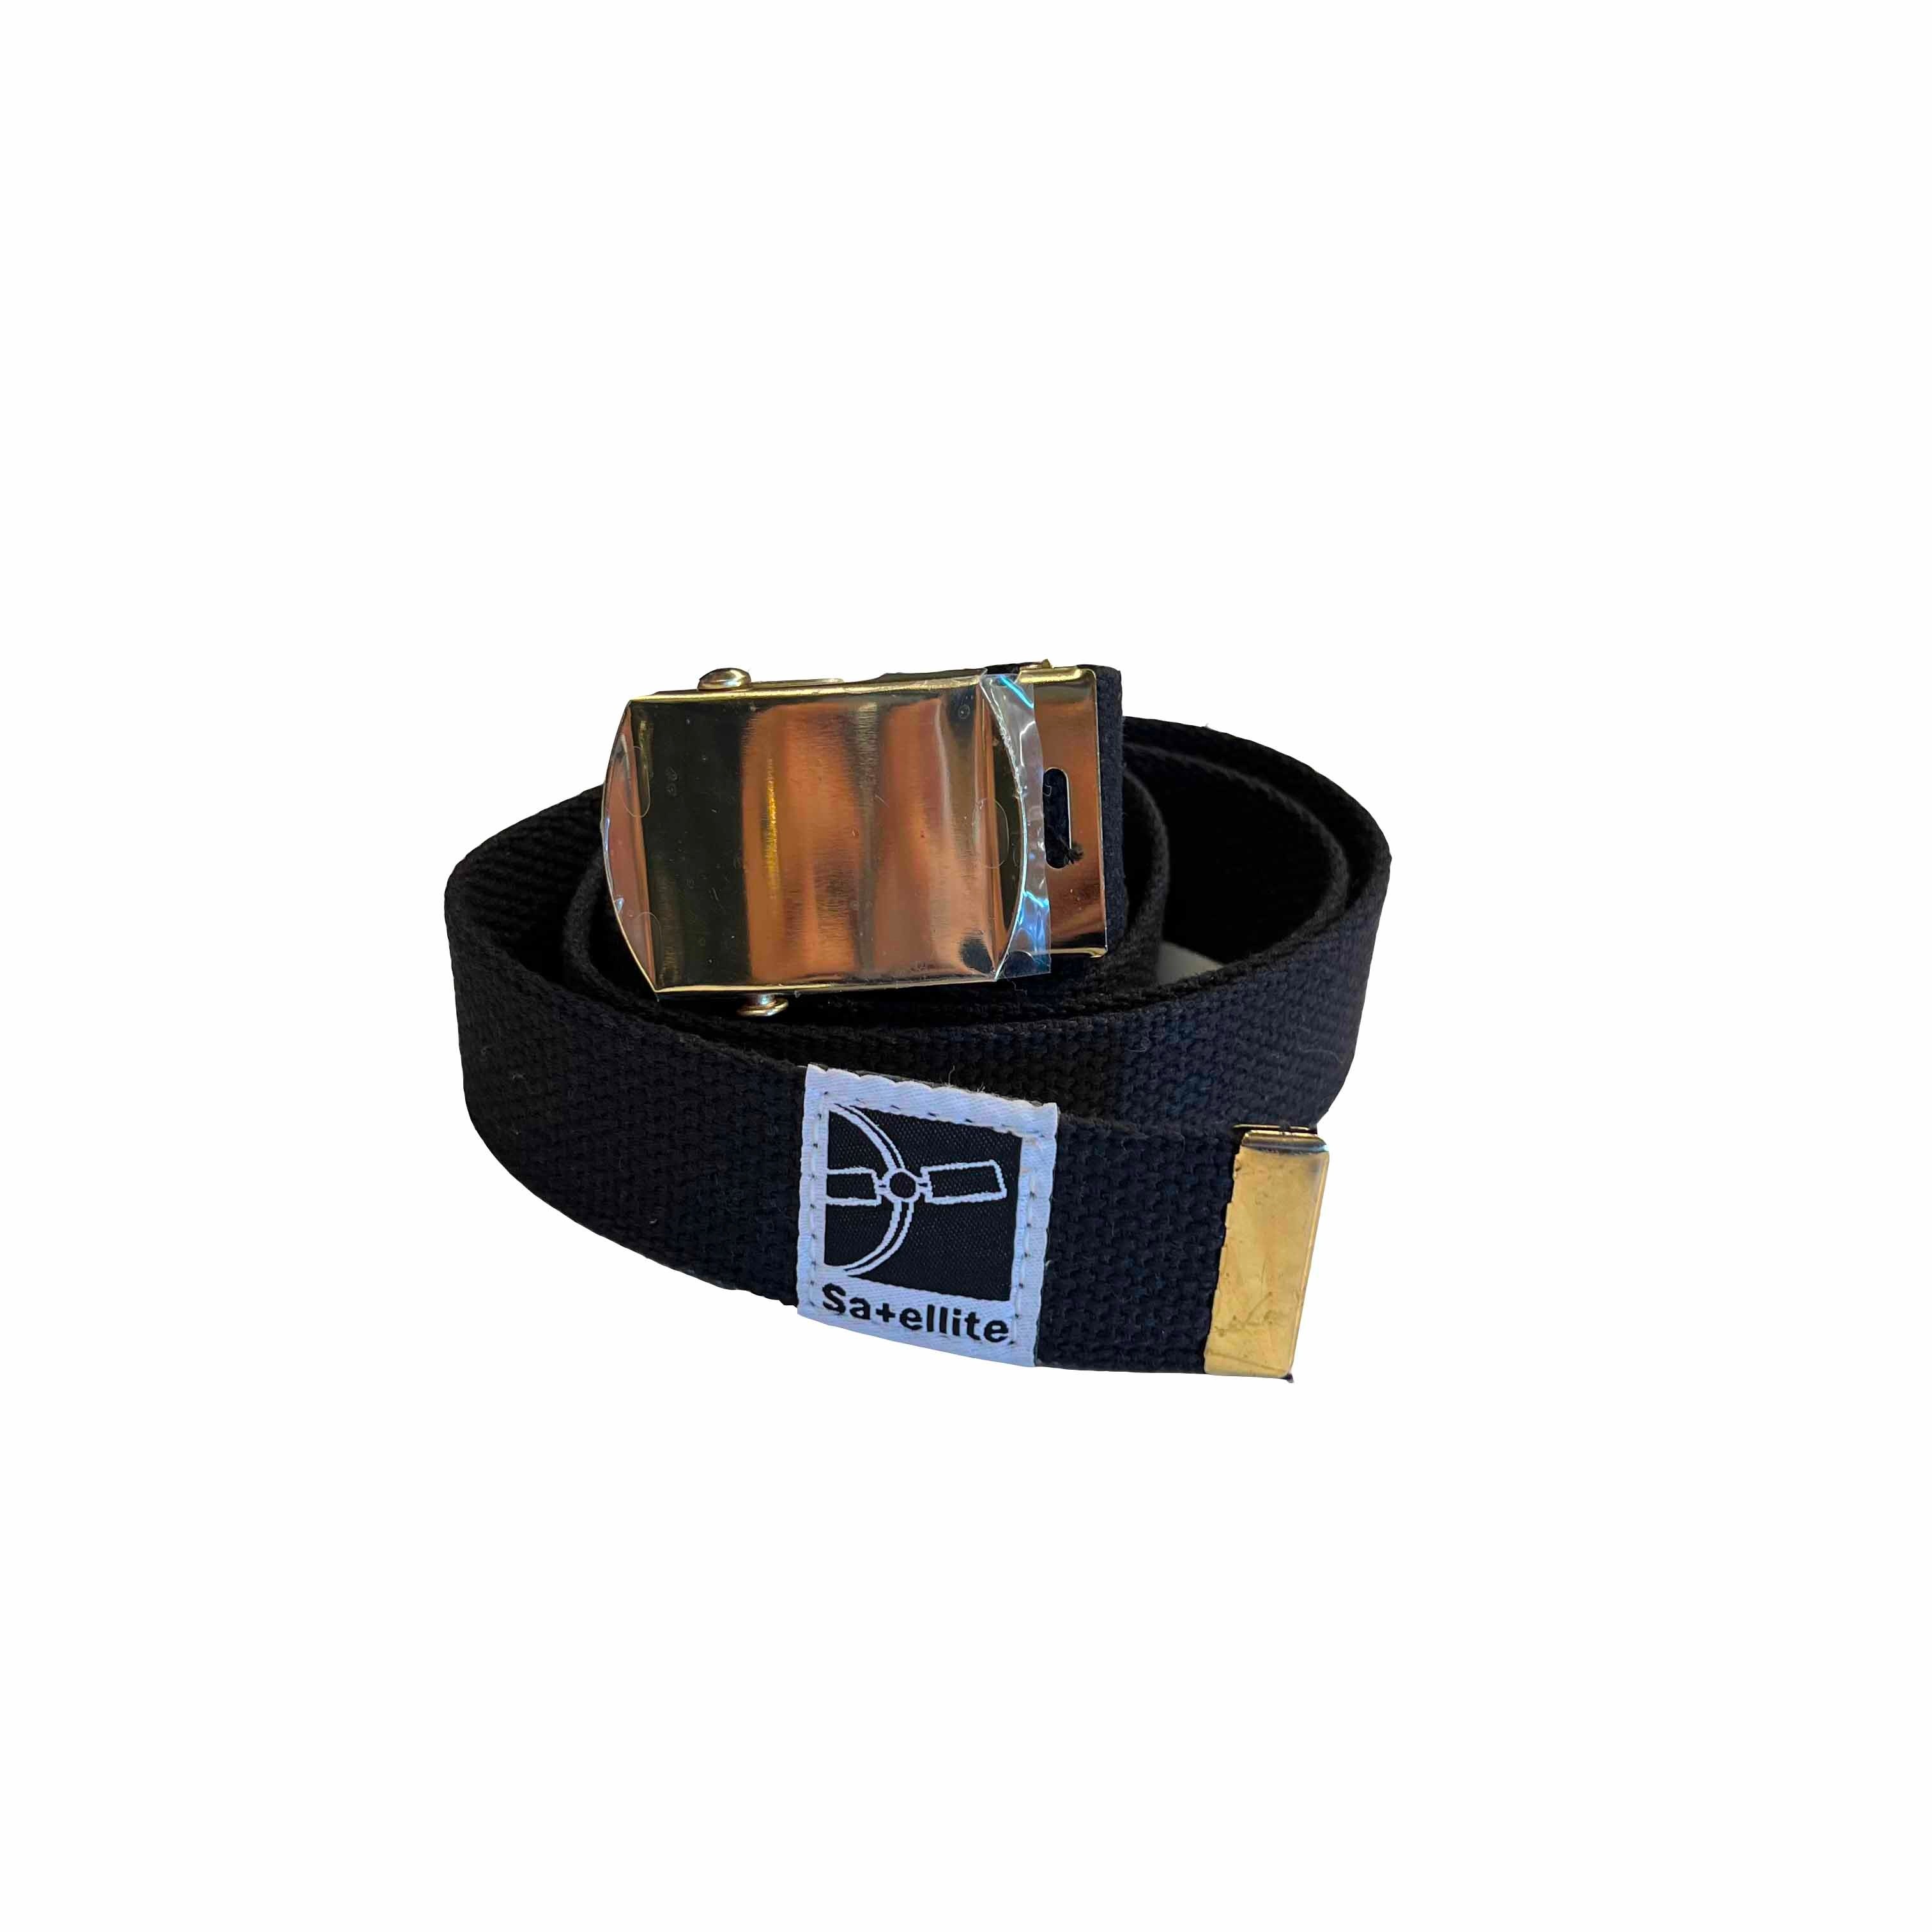 Satellite Web Belt (black/gold)